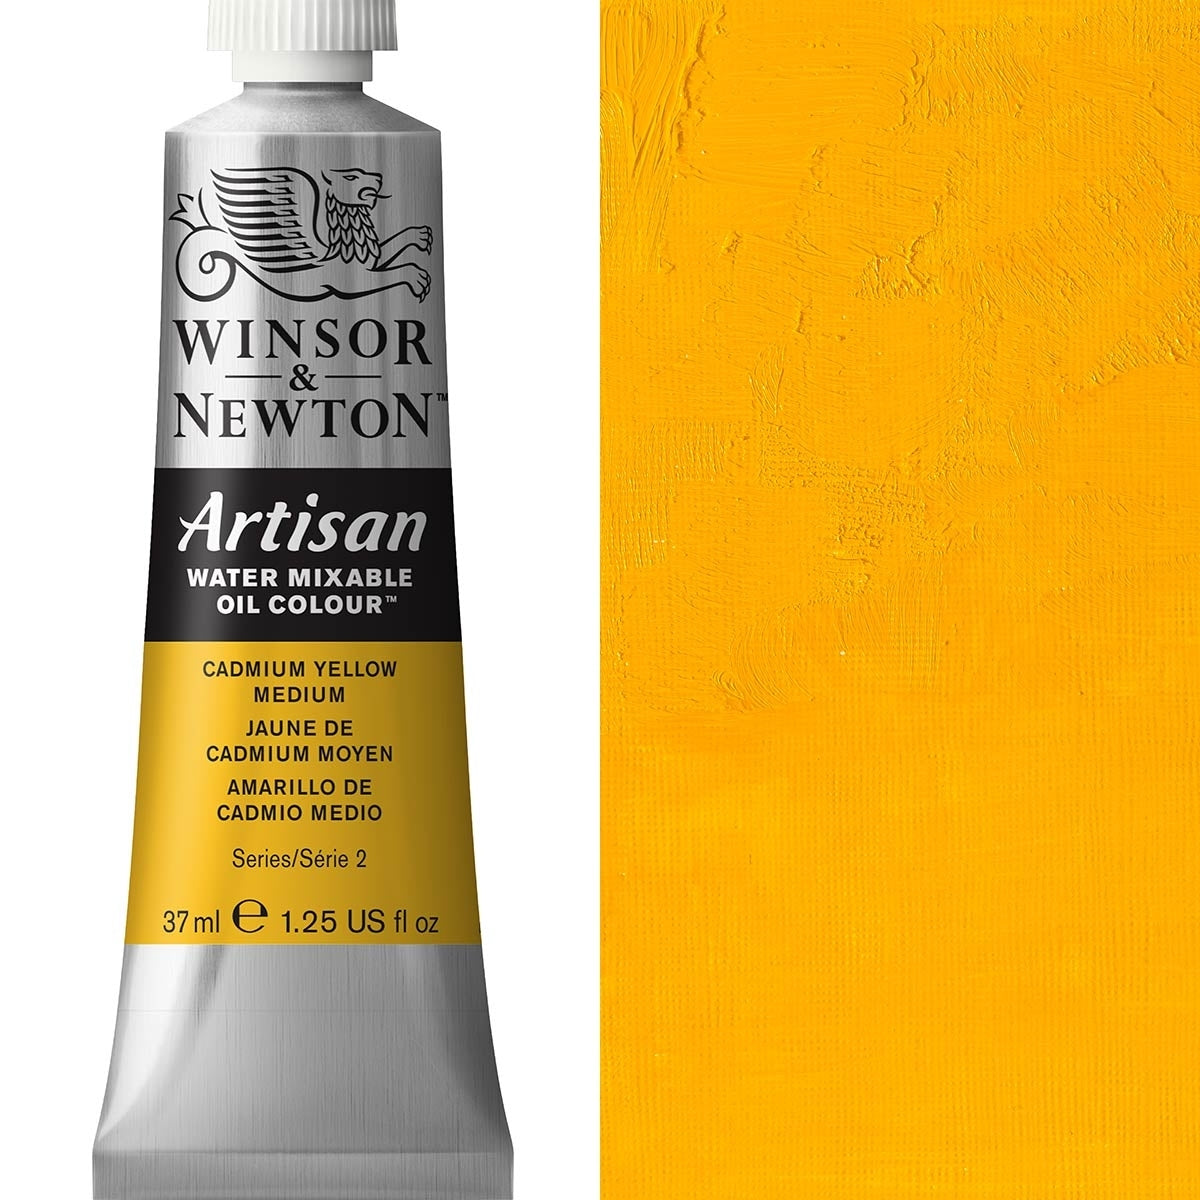 Winsor and Newton - Artisan Oil Colour Watermixable - 37ml - Cadmium Yellow Medium